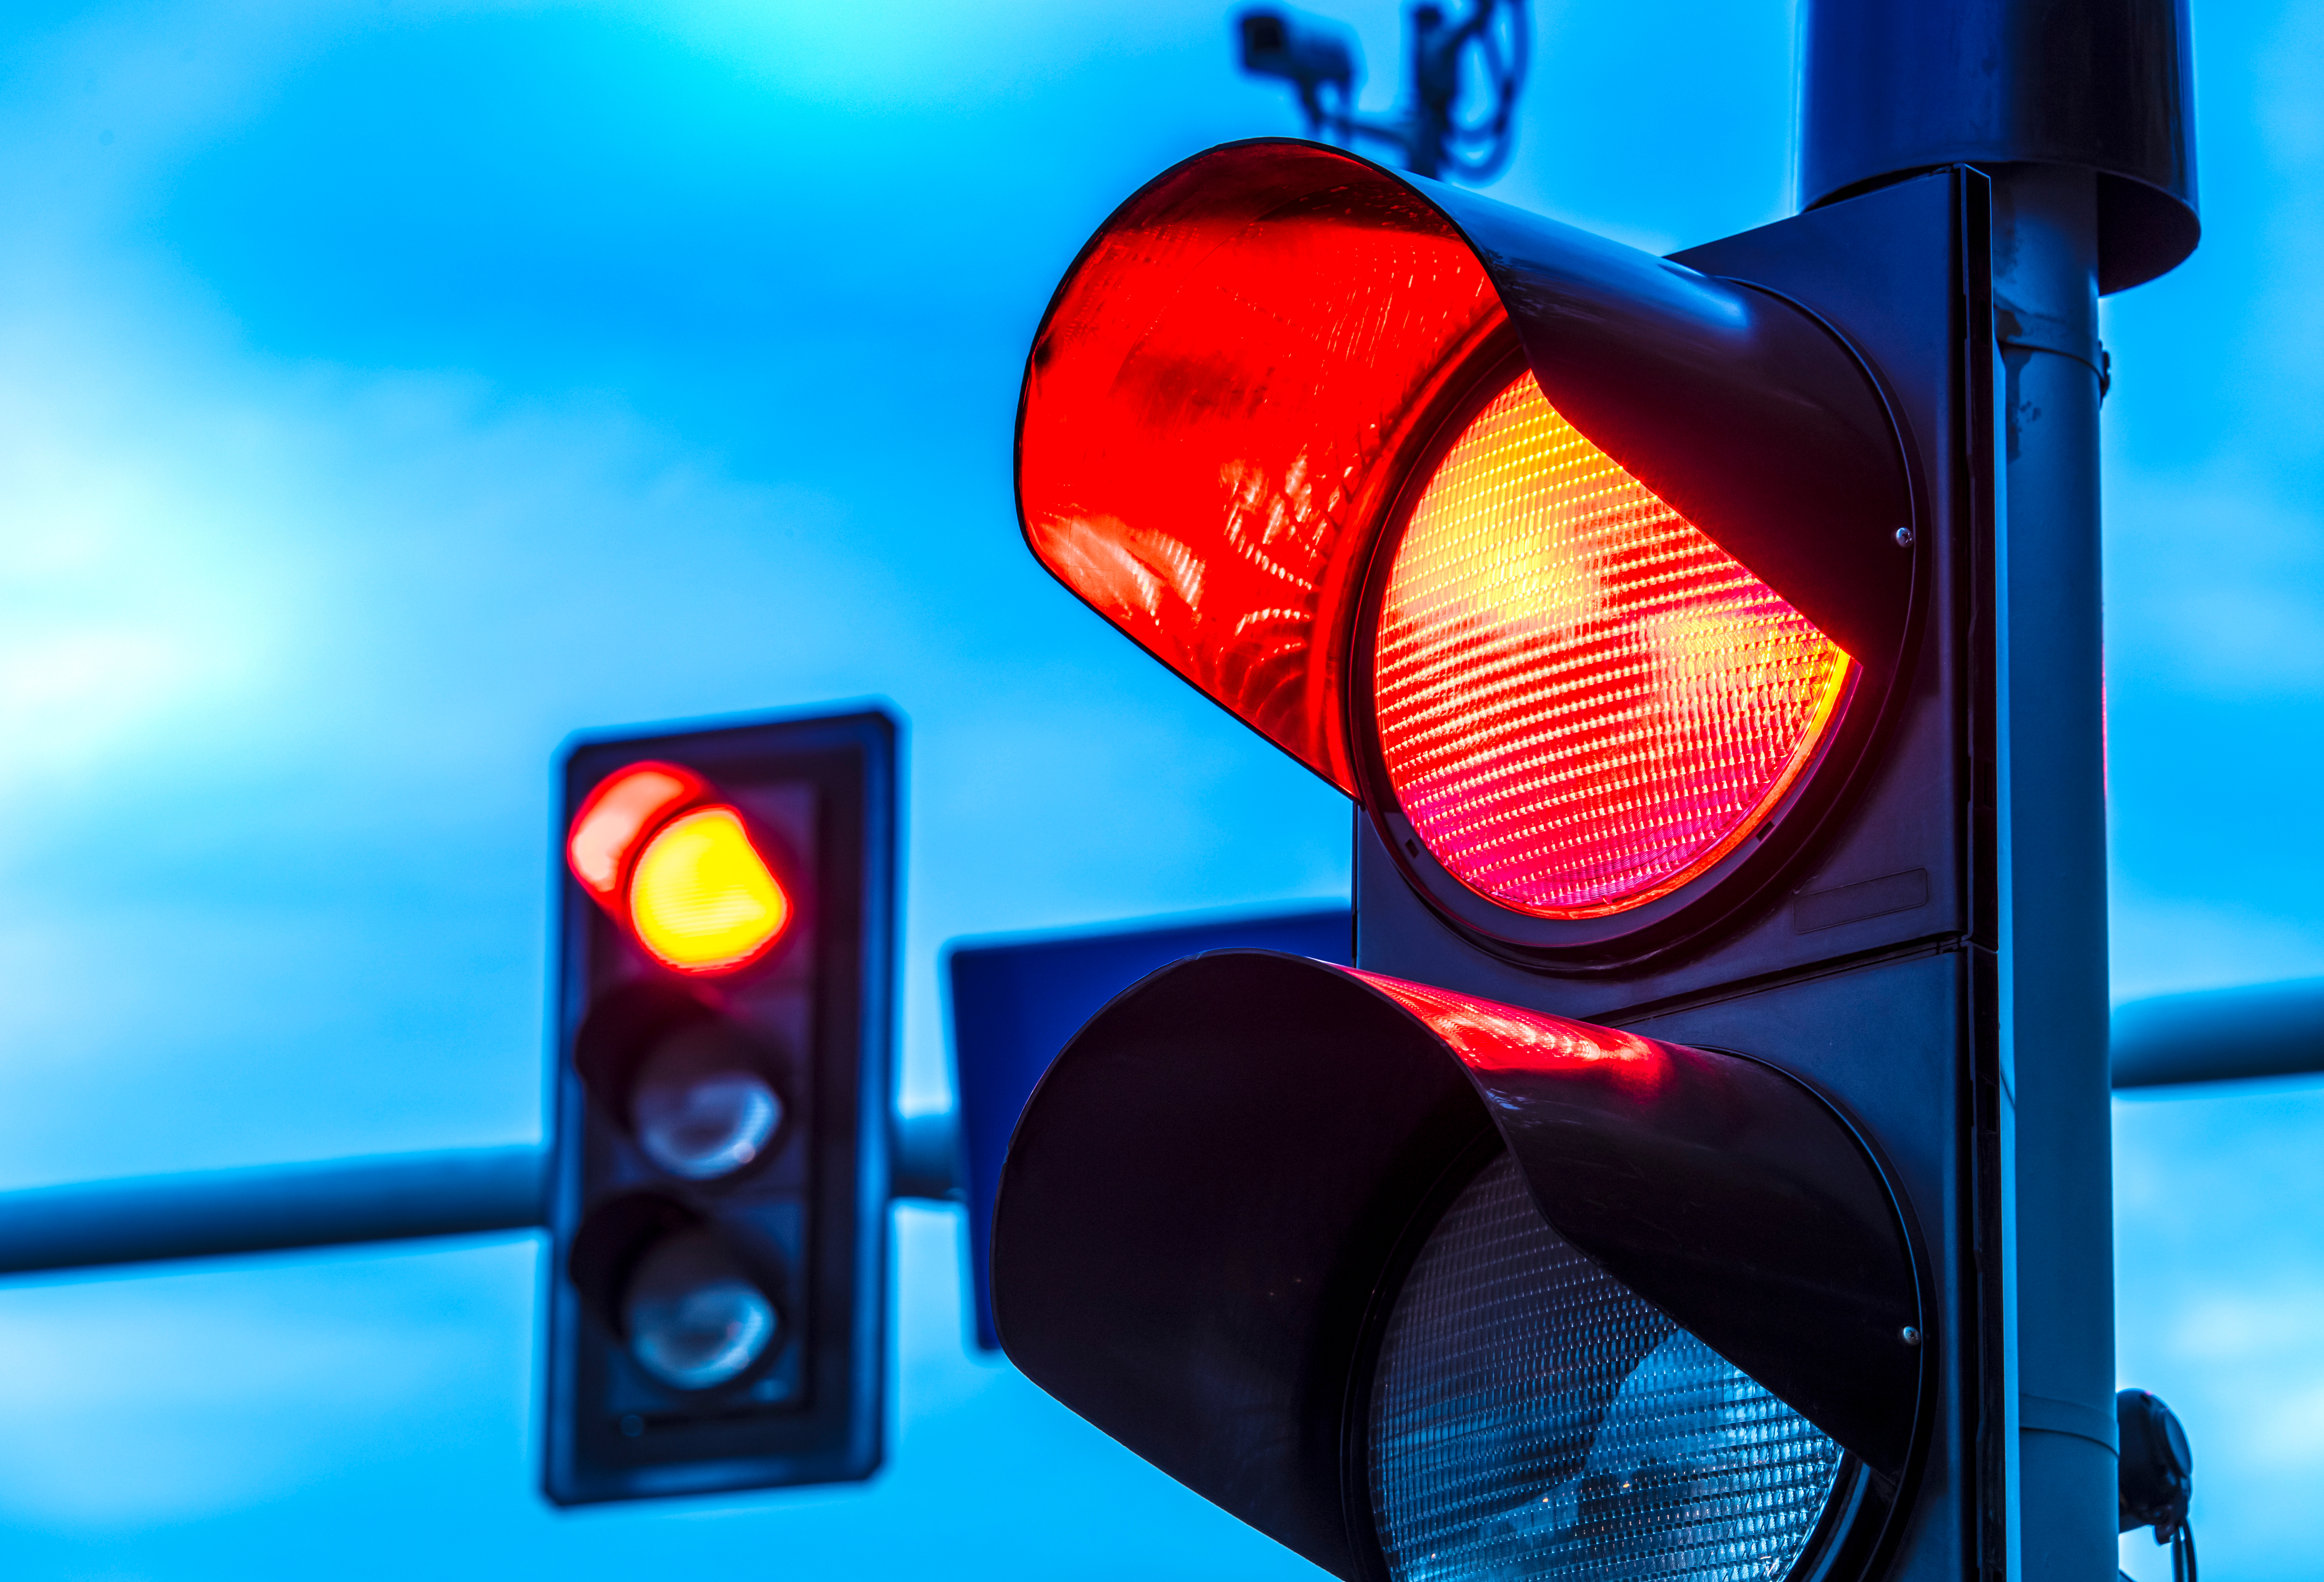 A traffic signal light flashing red | Source: Shutterstock